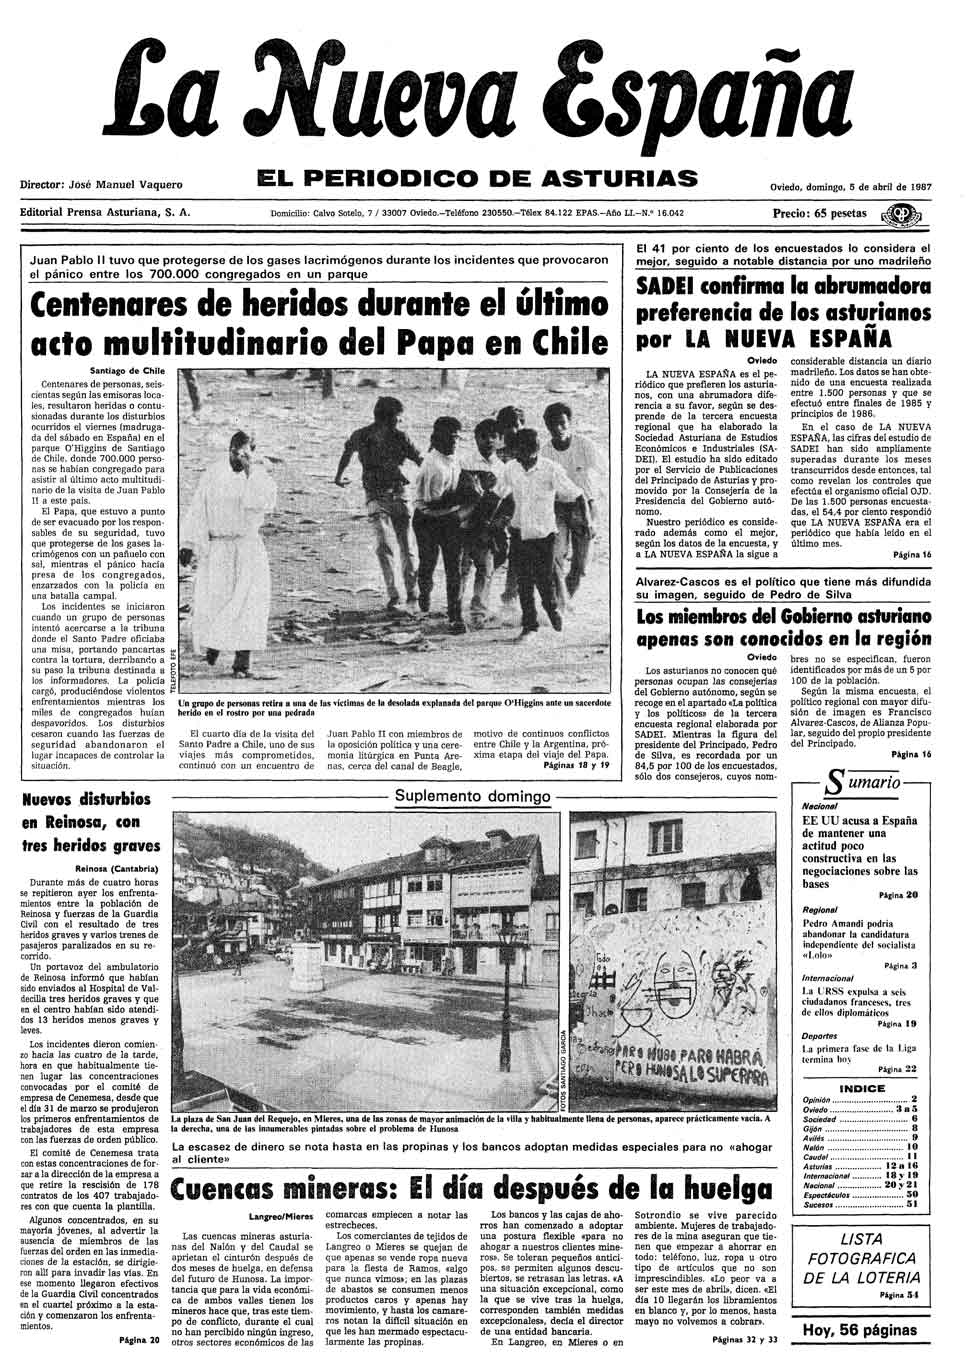 Portada del Domingo, 5 de Abril de 1987